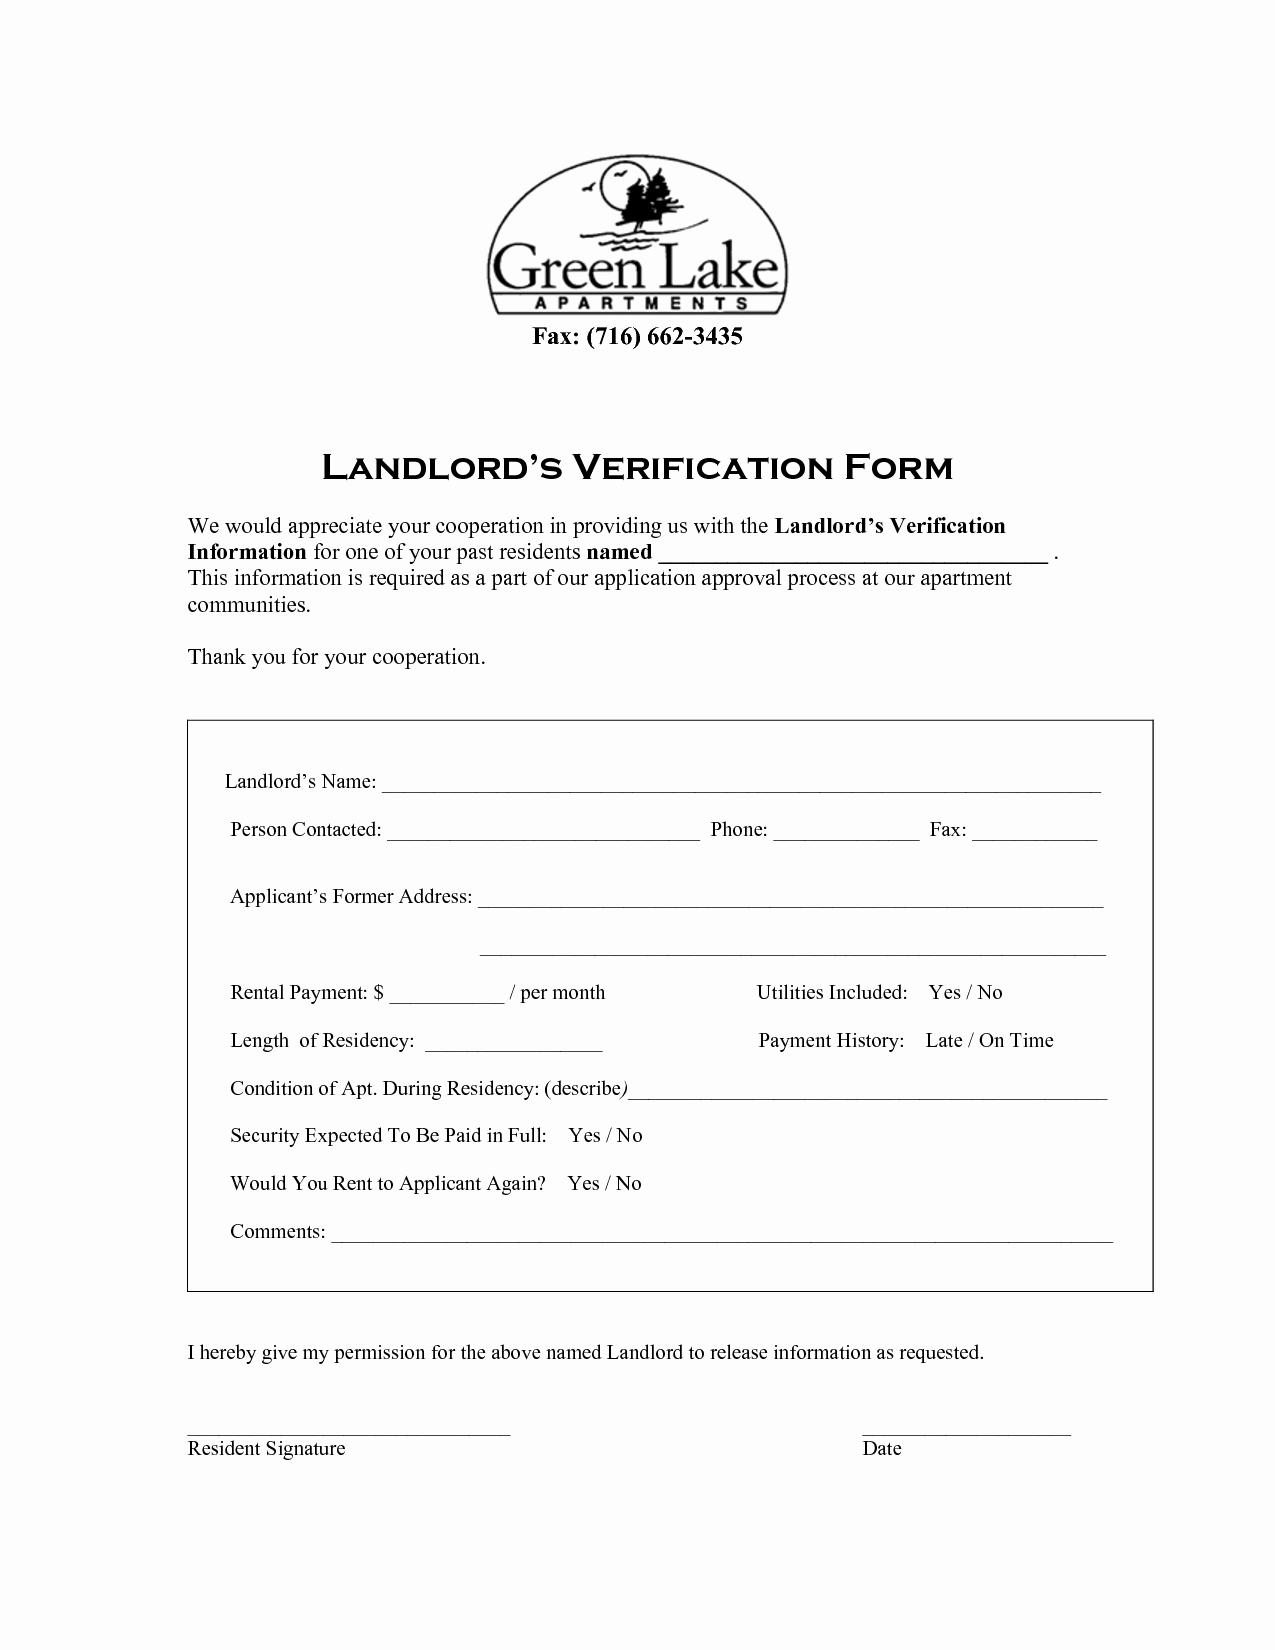 Landlord Verification form Template Luxury Best S Of Landlord Verification form Free Rental